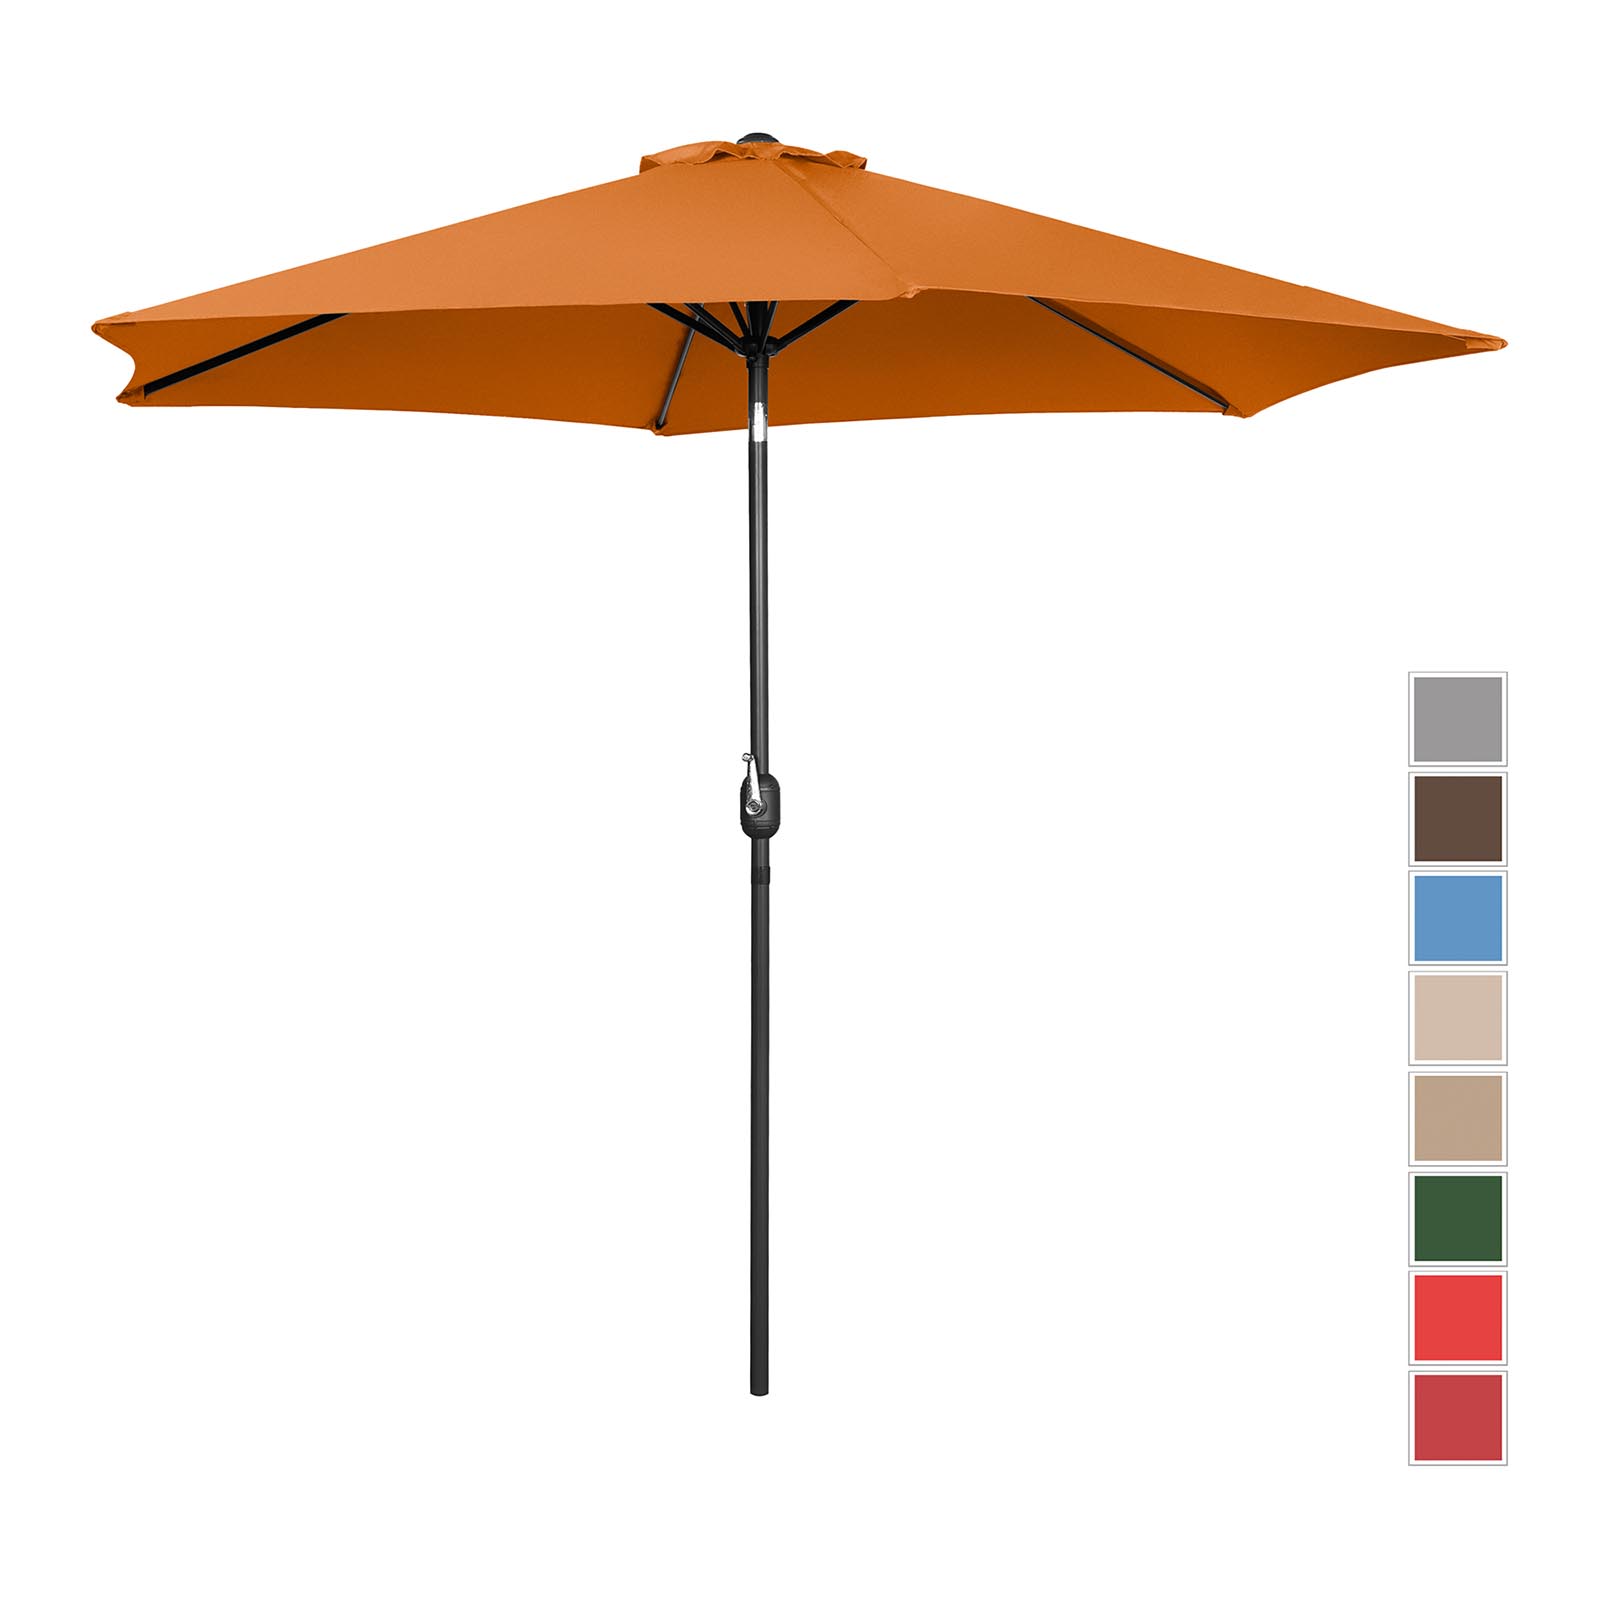 Parasoll stort - orange - sexkantigt - Ø 300 cm - fällbart